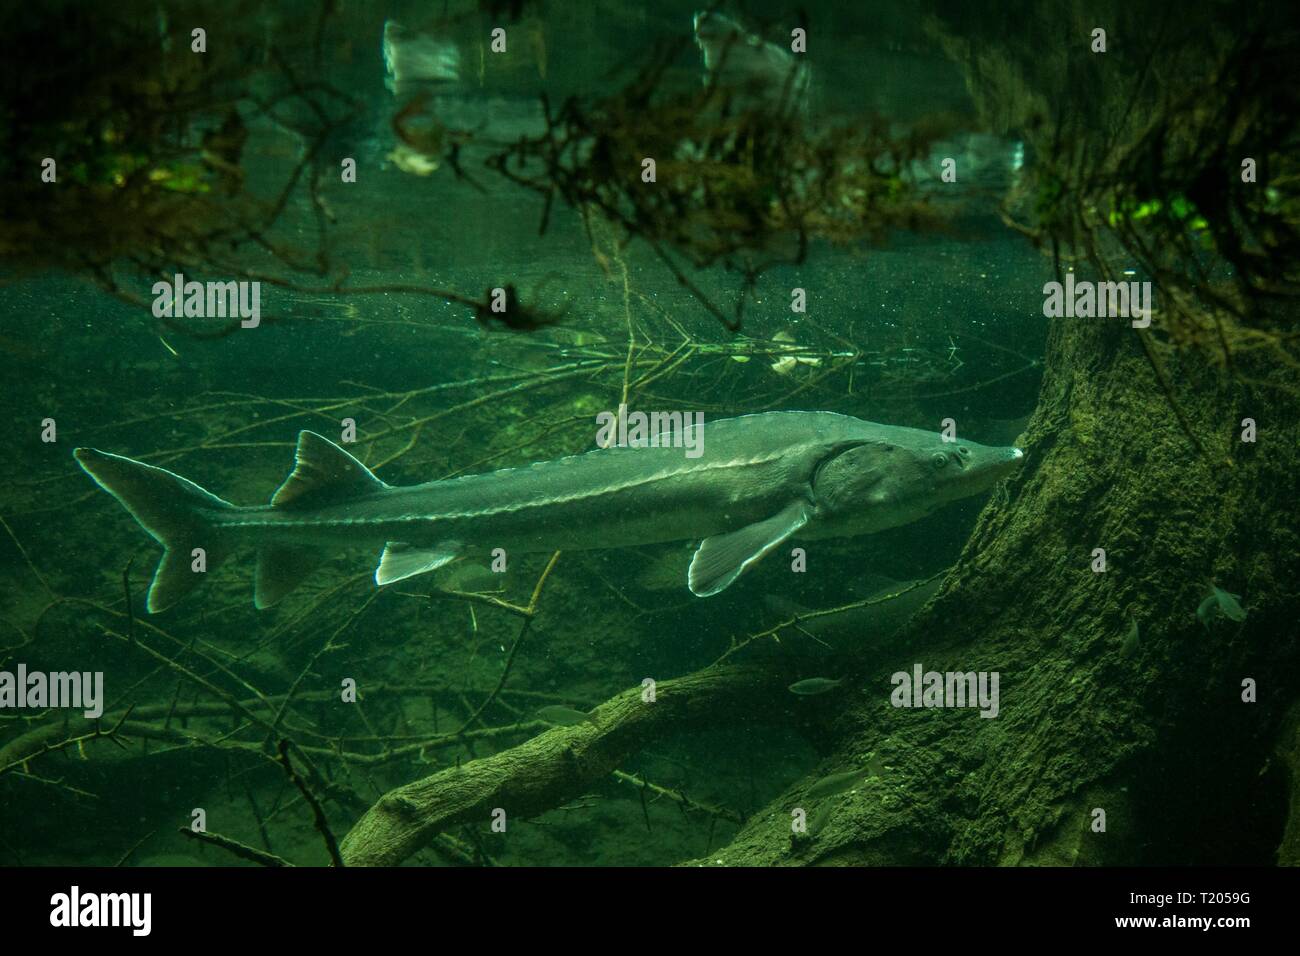 Sturgeon (Ancipenser sturio), fresh water fish, beautiful fish with tree trunk and roots in background, aquarium, wallpaper Stock Photo